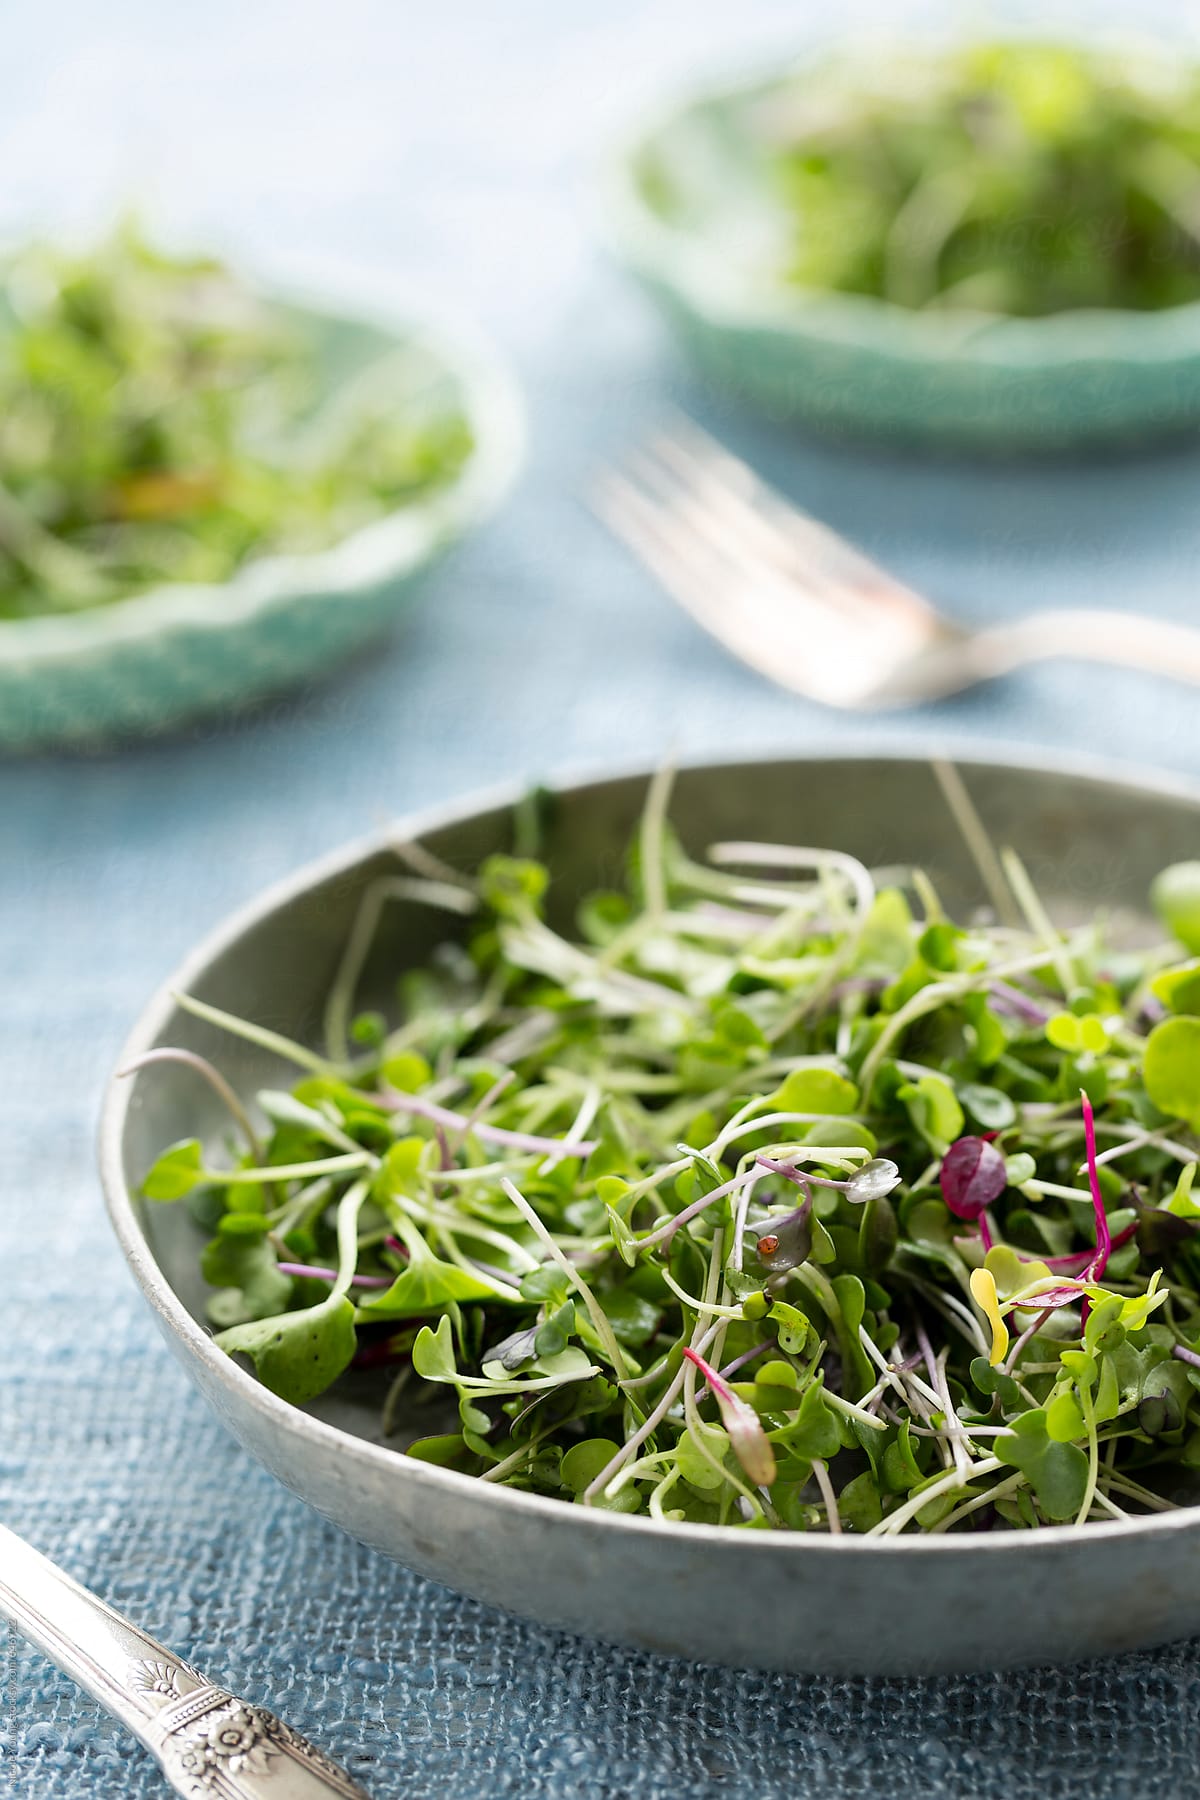 "Microgreen Salad" by Stocksy Contributor "Nicolesy, Inc." - Stocksy